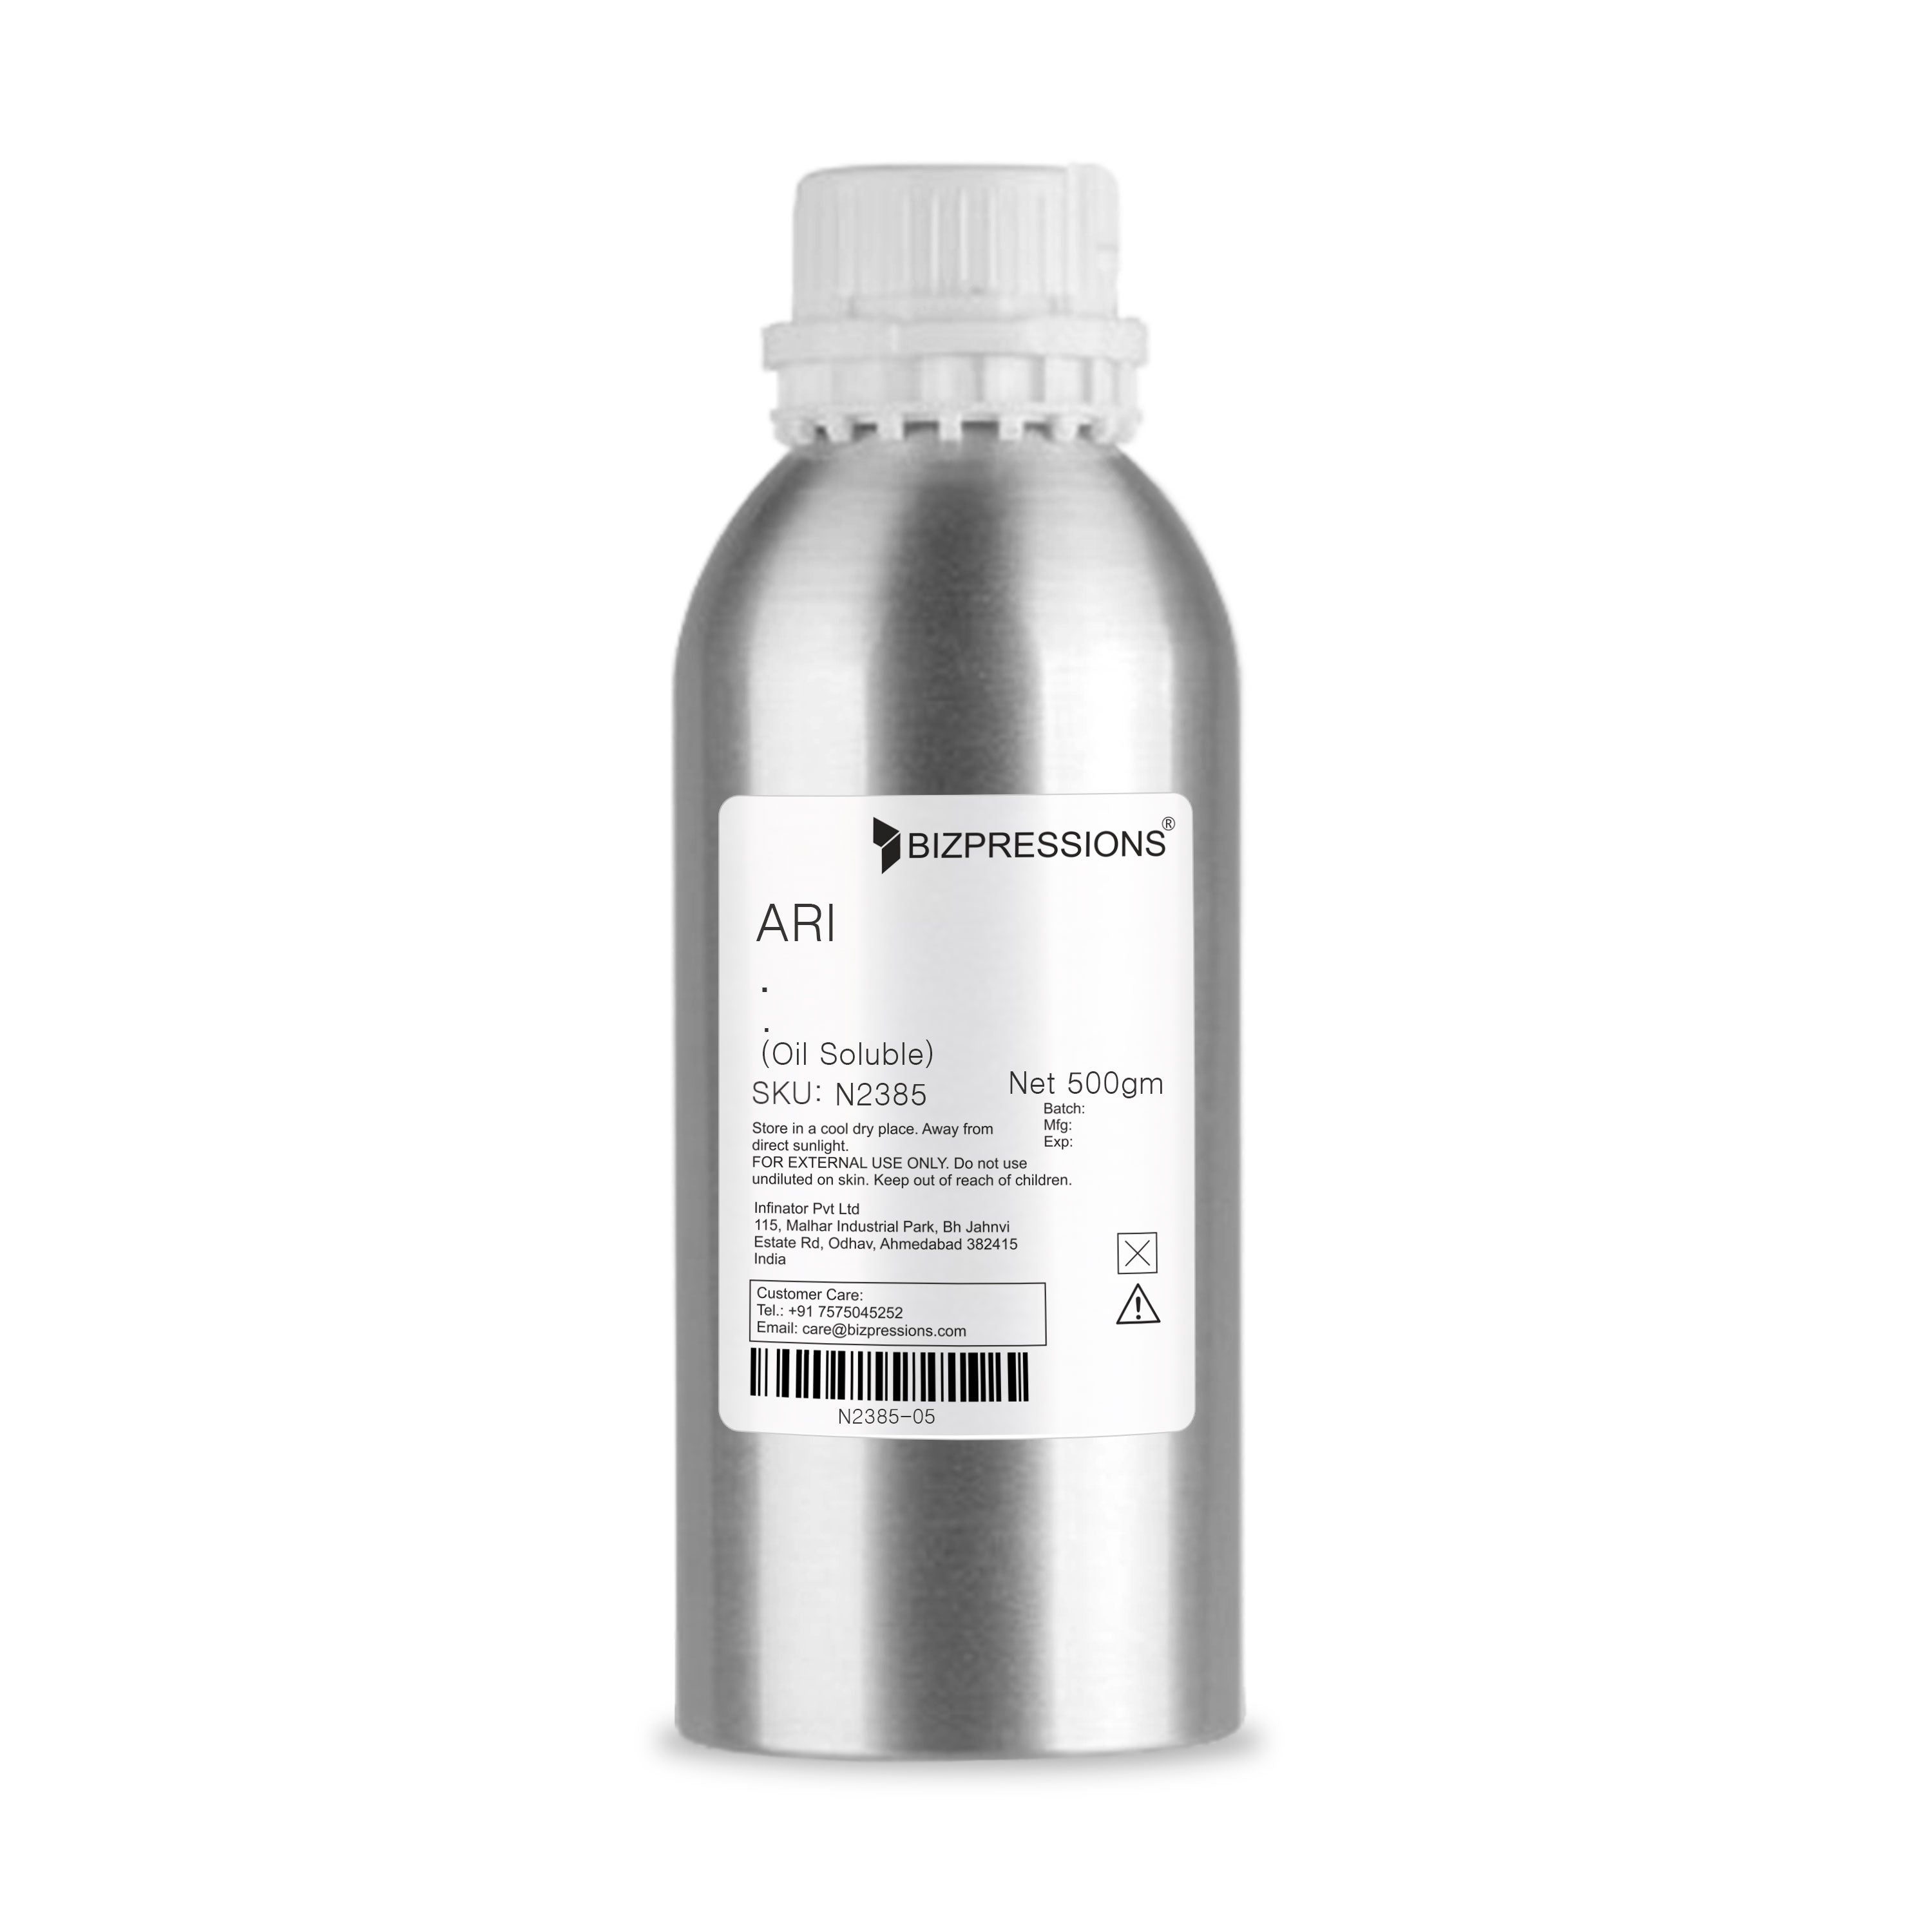 ARI - Fragrance (Oil Soluble)